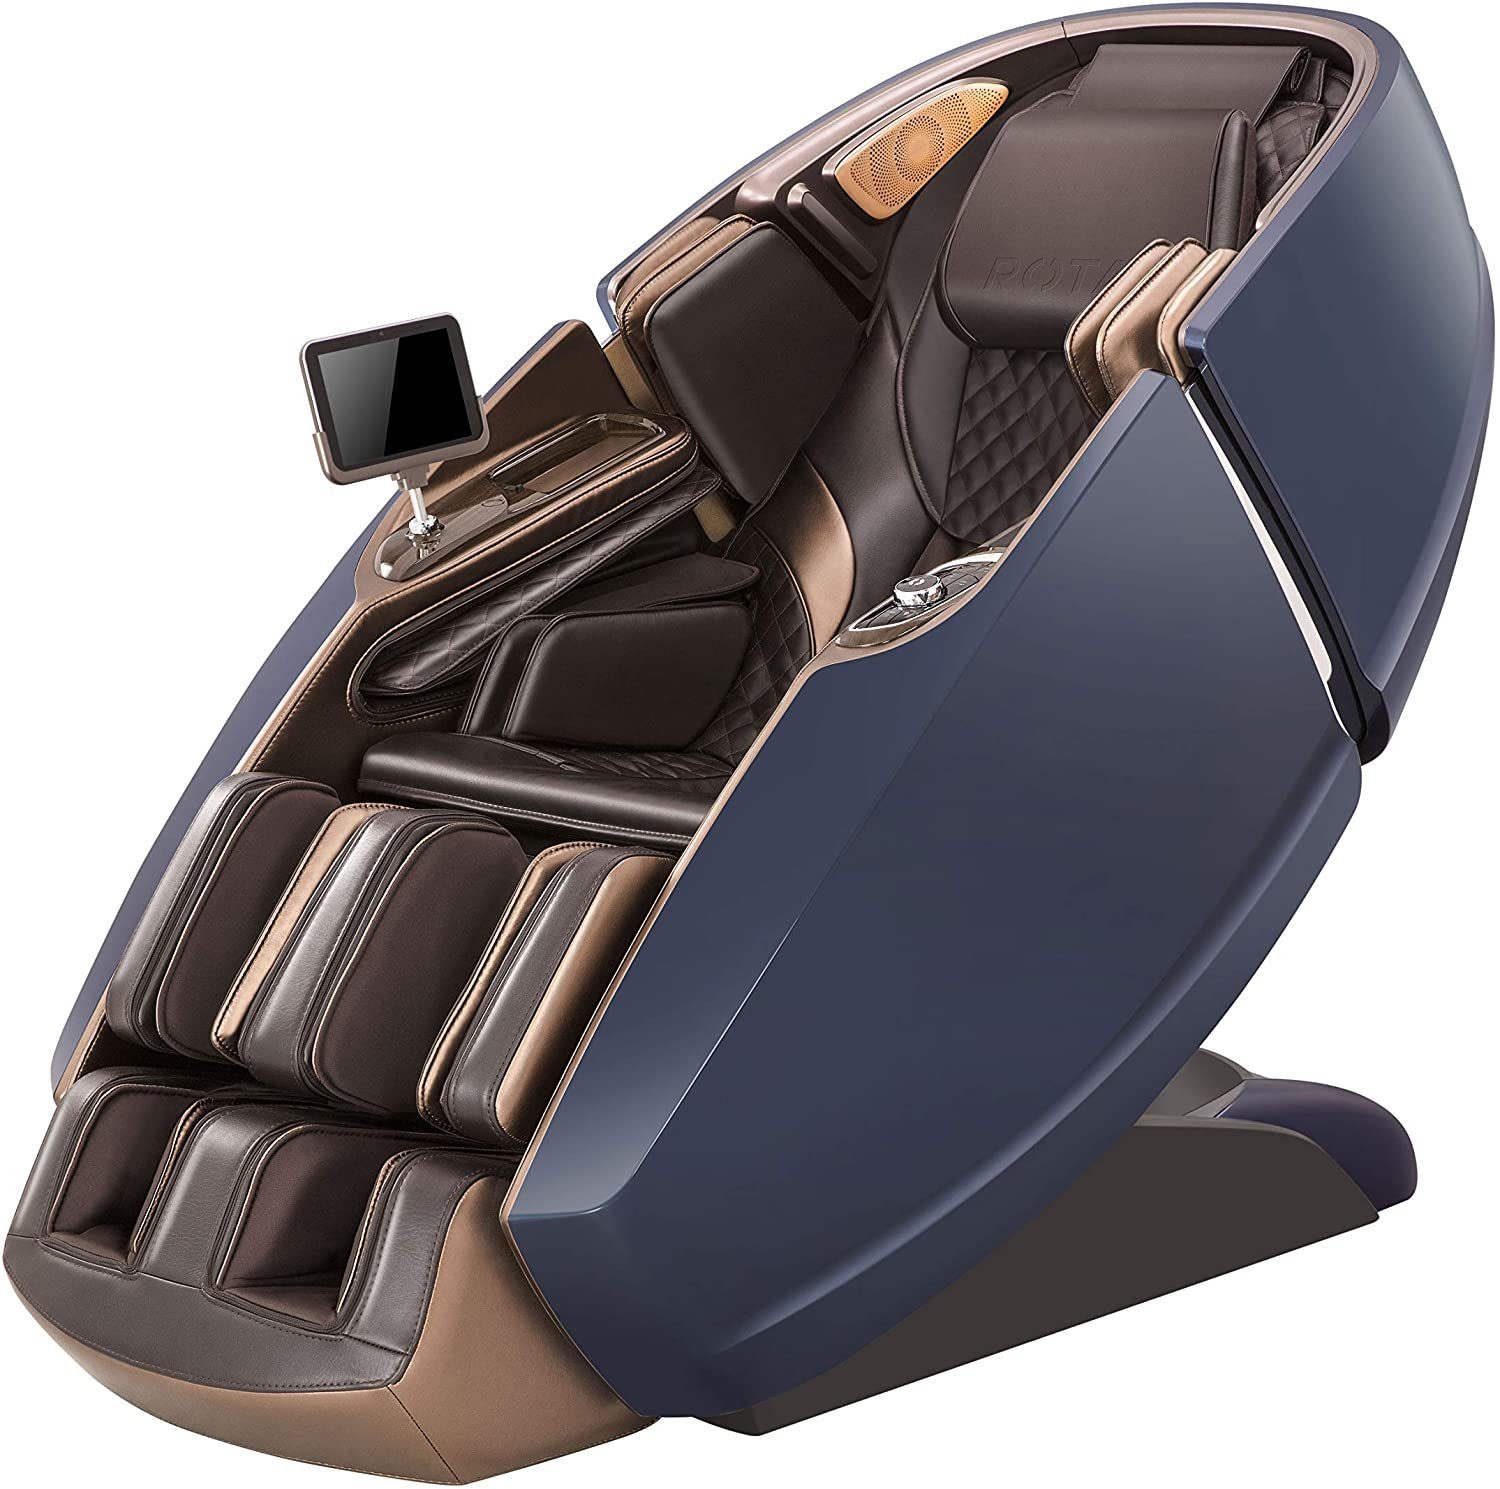 NAIPO Massagesessel, 3D High-End Massagestuhl mit Tablet, Raumkapsel-Design BLAU-BRAUN-AUFBAUSERVICE